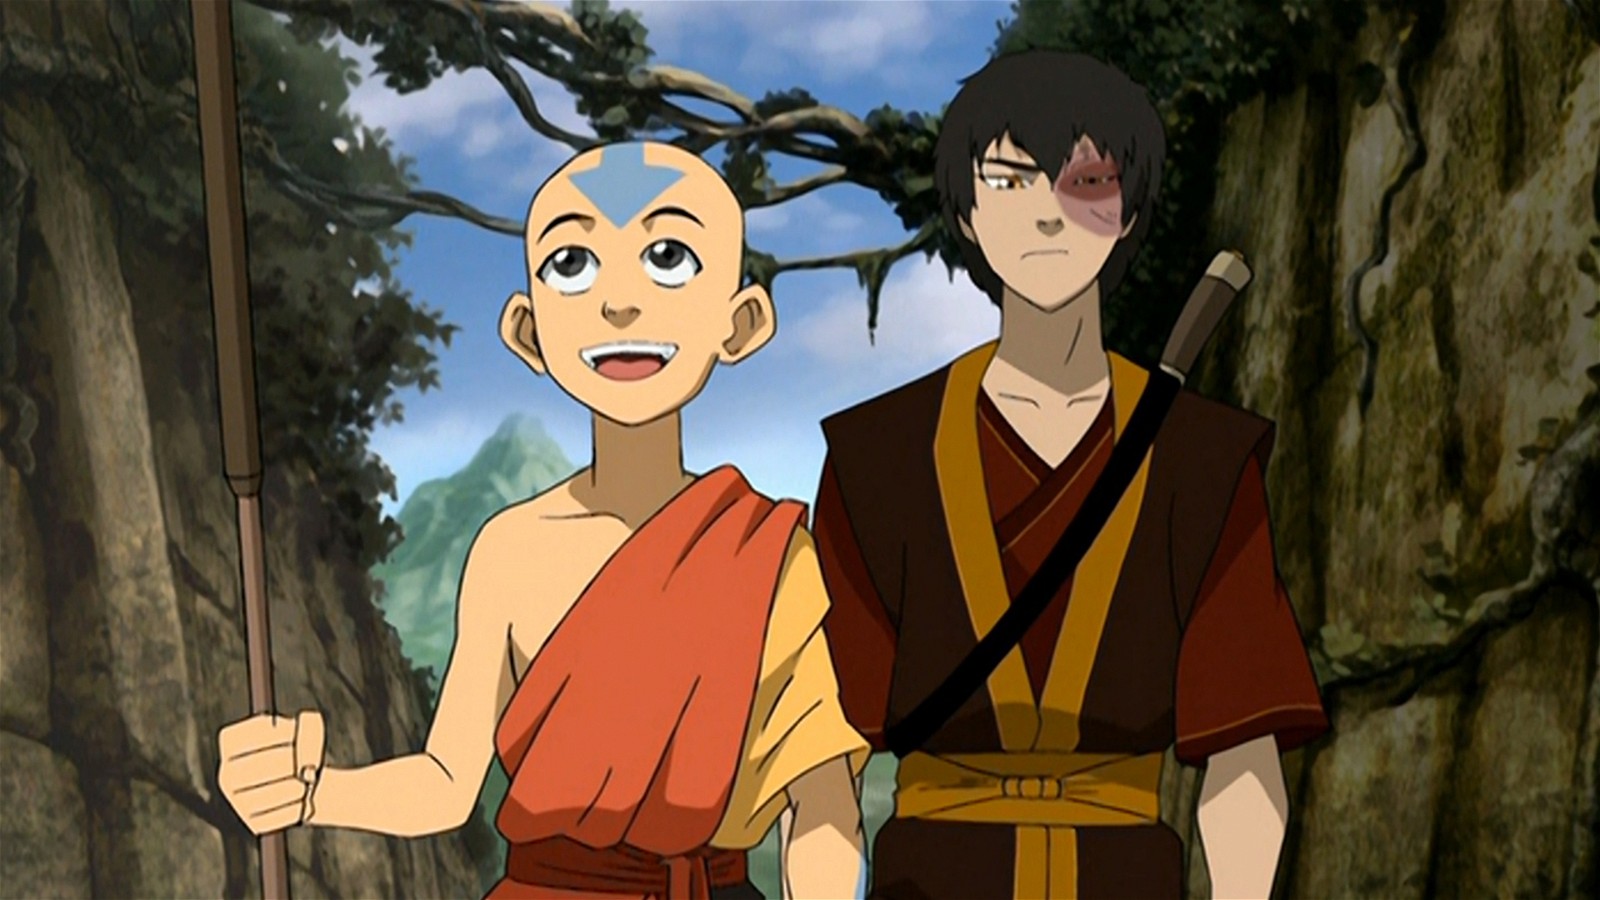 Aang and Zoku in Avatar: The Last Airbender season 3